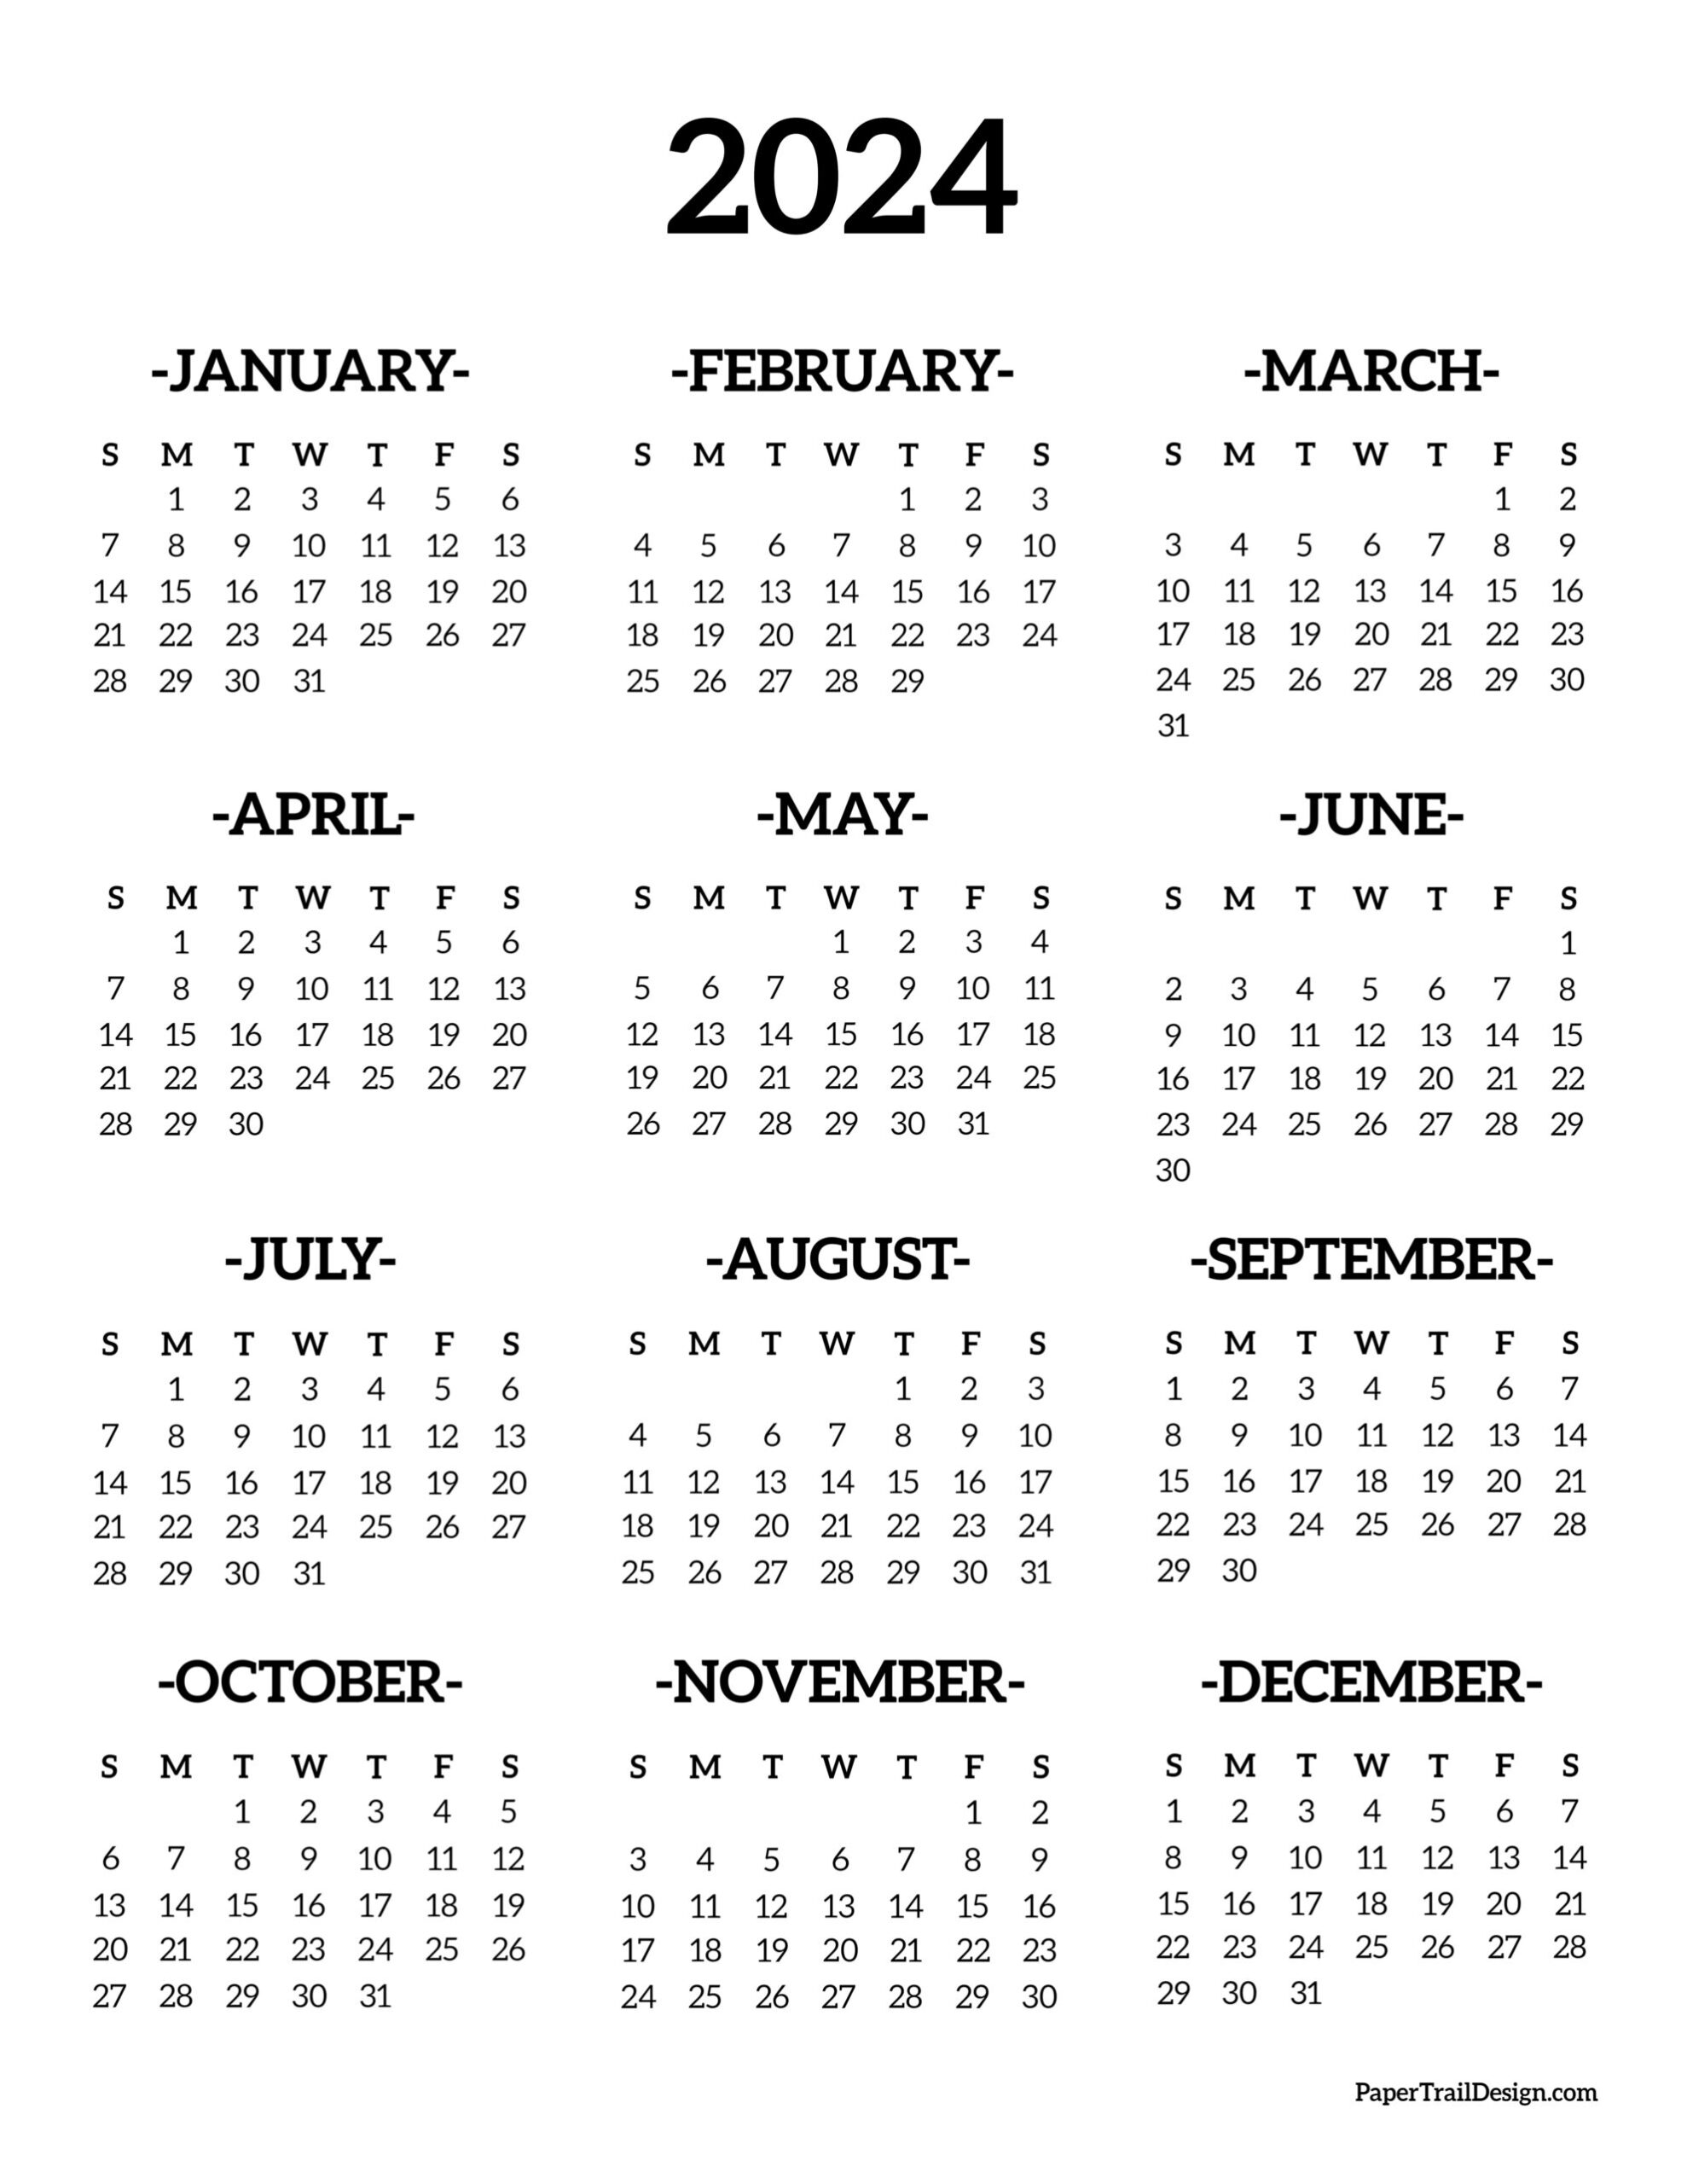 Calendar 2024 Printable One Page - Paper Trail Design for Calendar Printable Free 2024